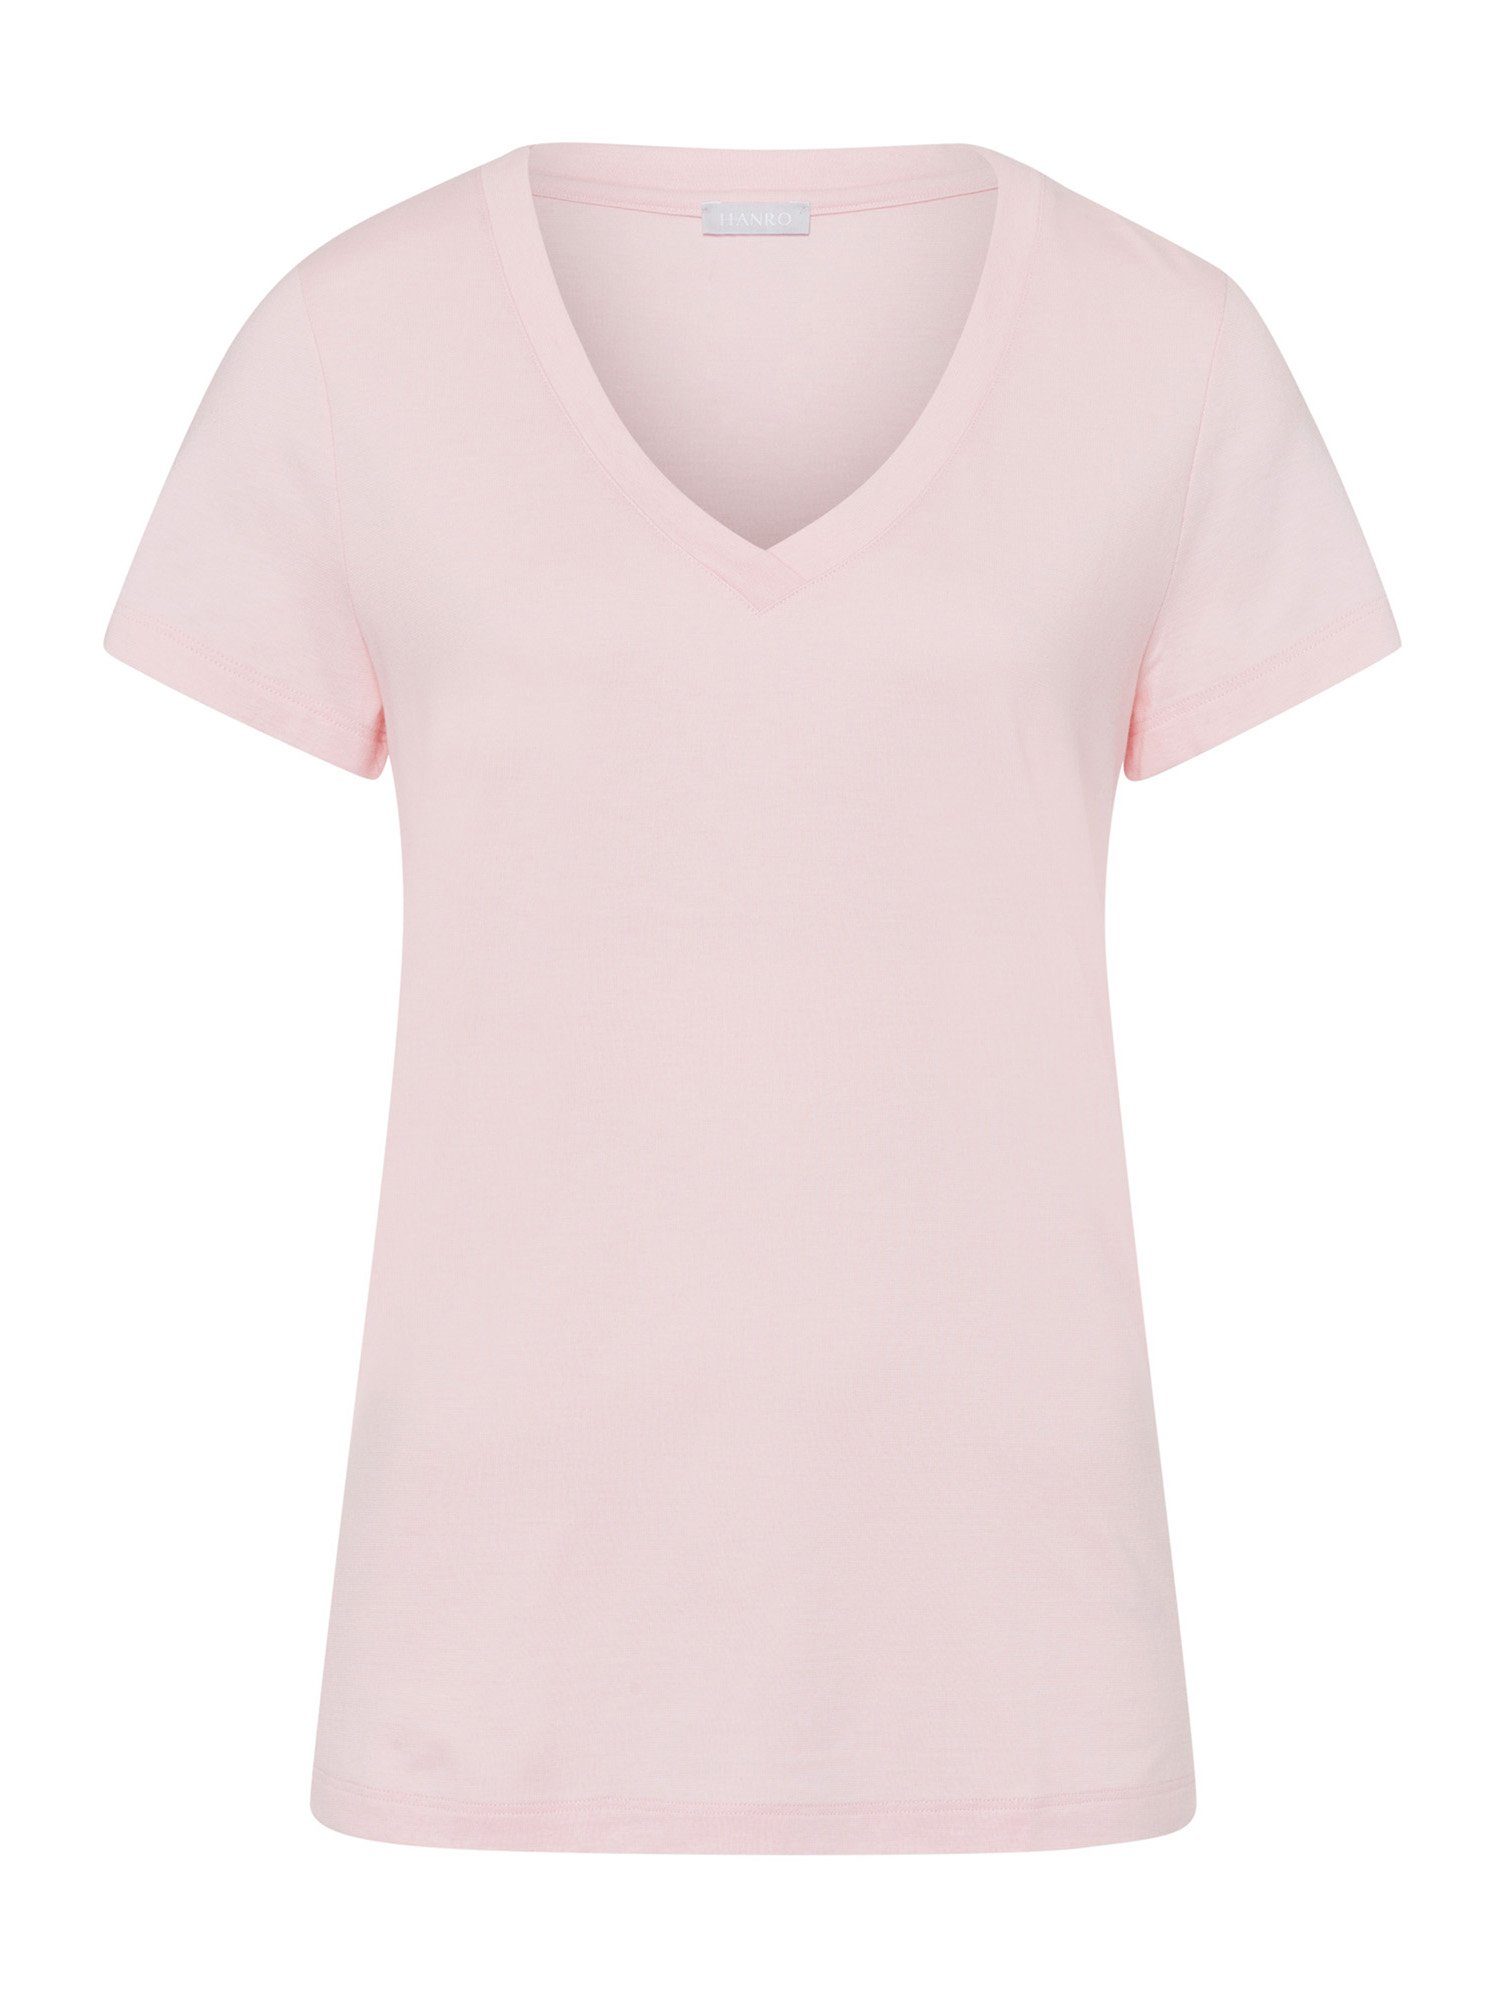 Hanro T-Shirt Sleep & Lounge whip pink